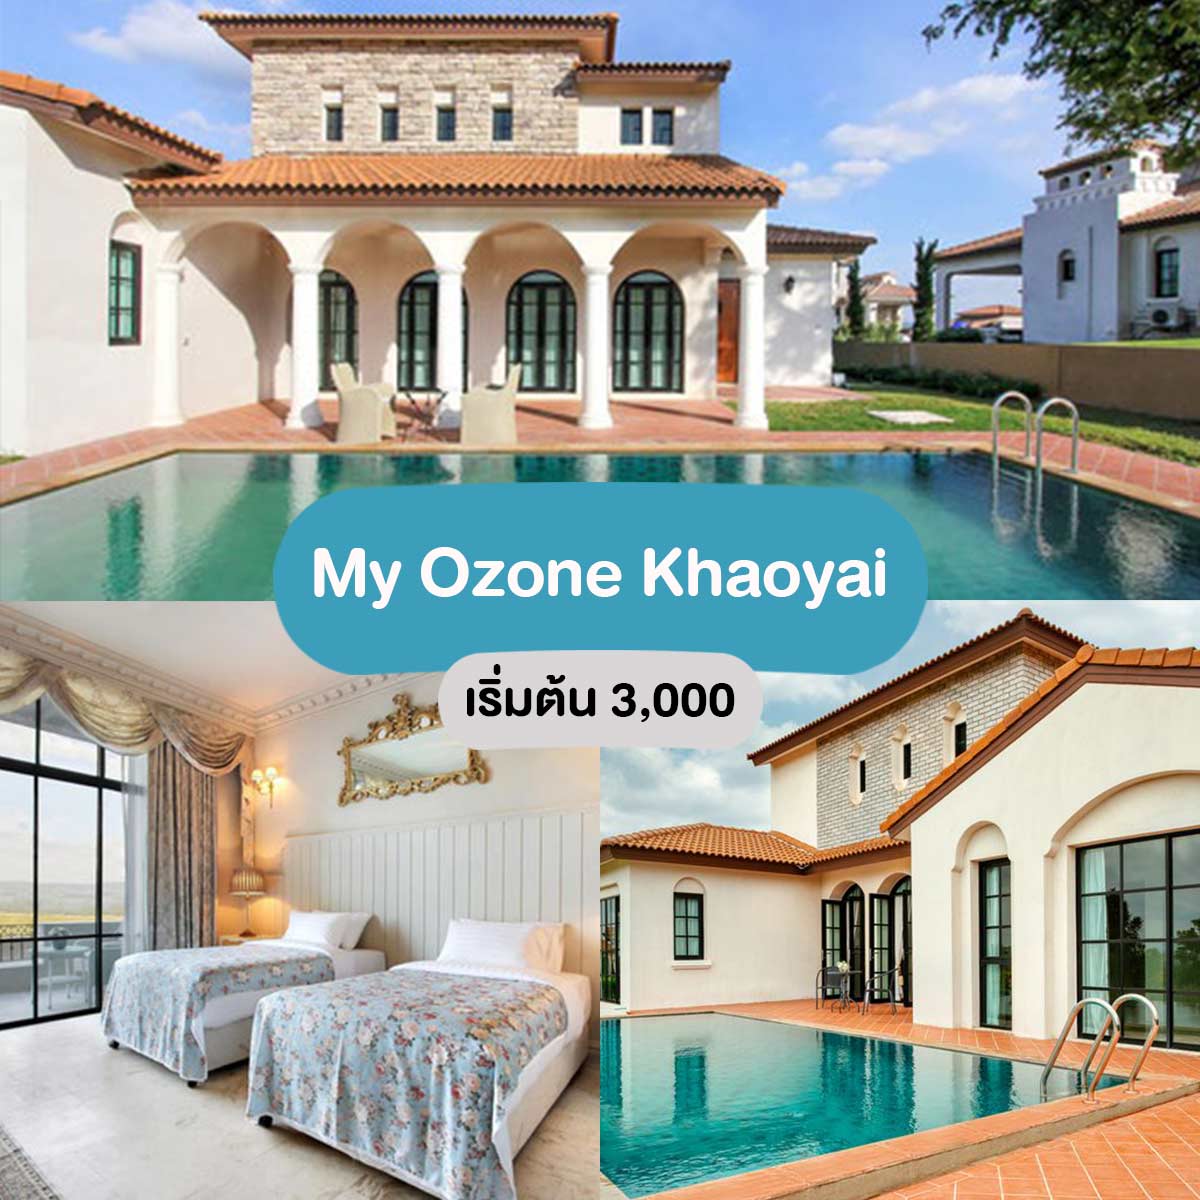 My Ozone Khaoyai